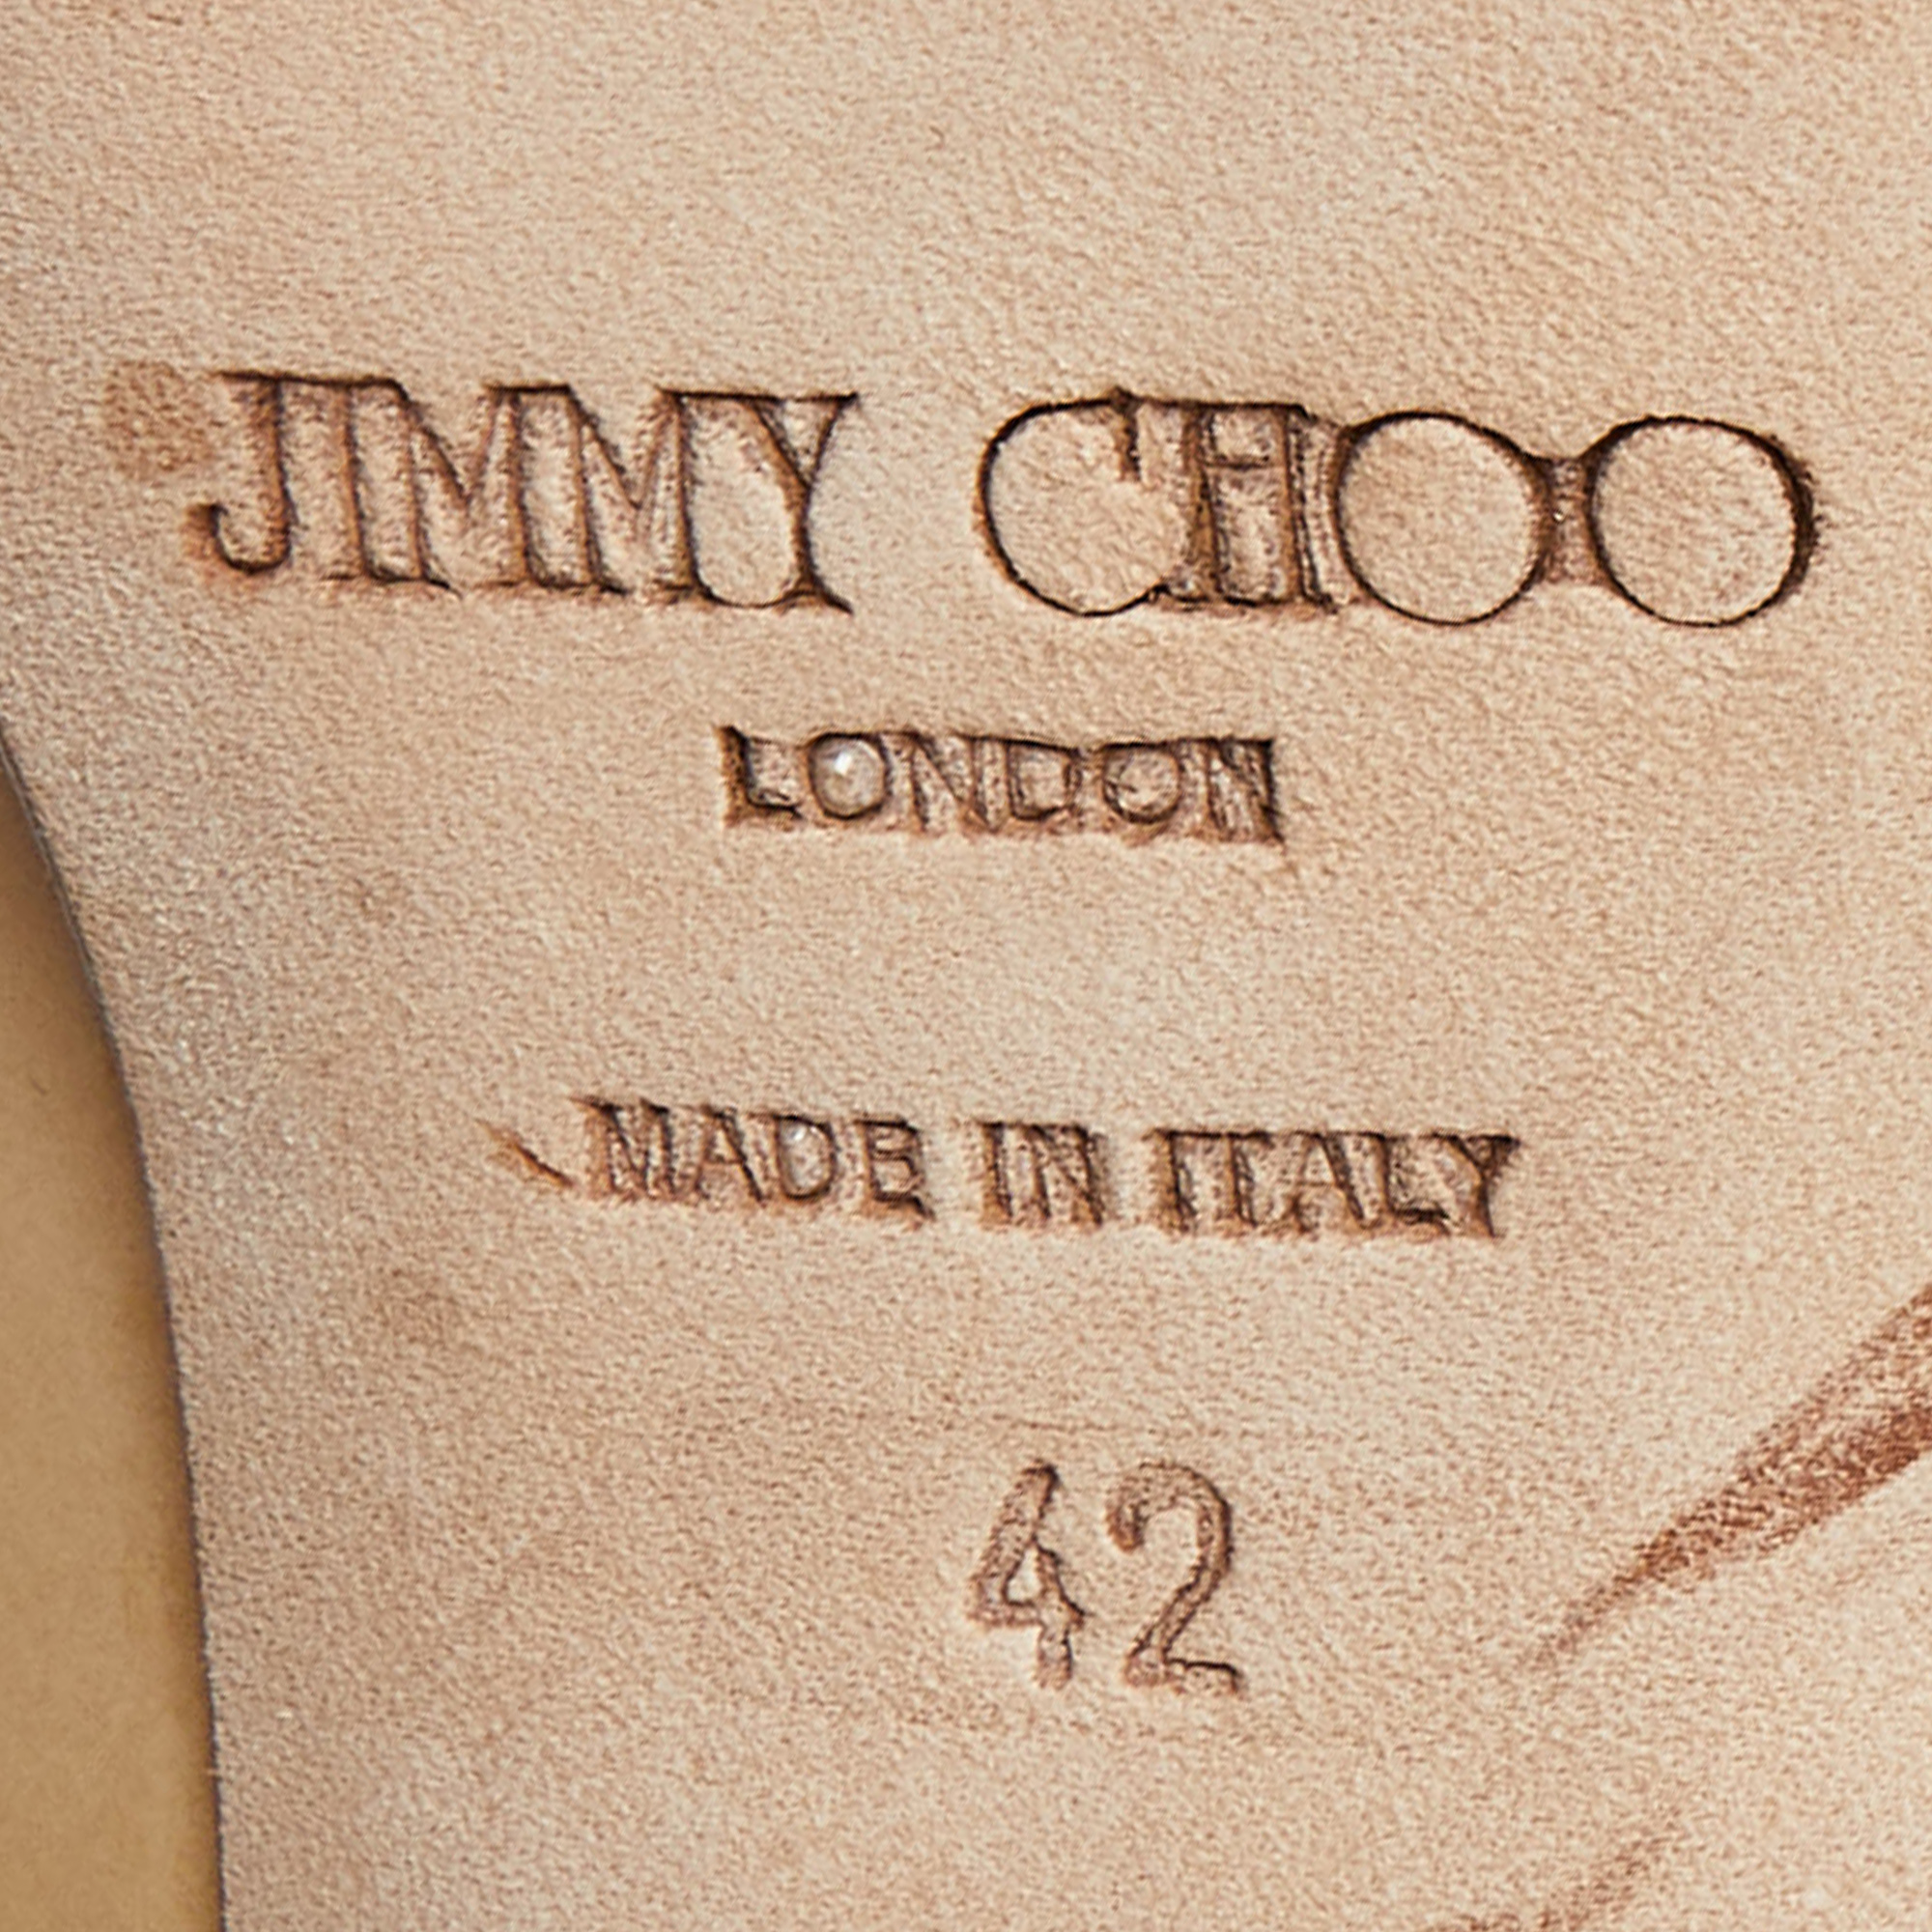 Jimmy Choo Cream Patent Leather Crown Peep Toe Pumps Size 42